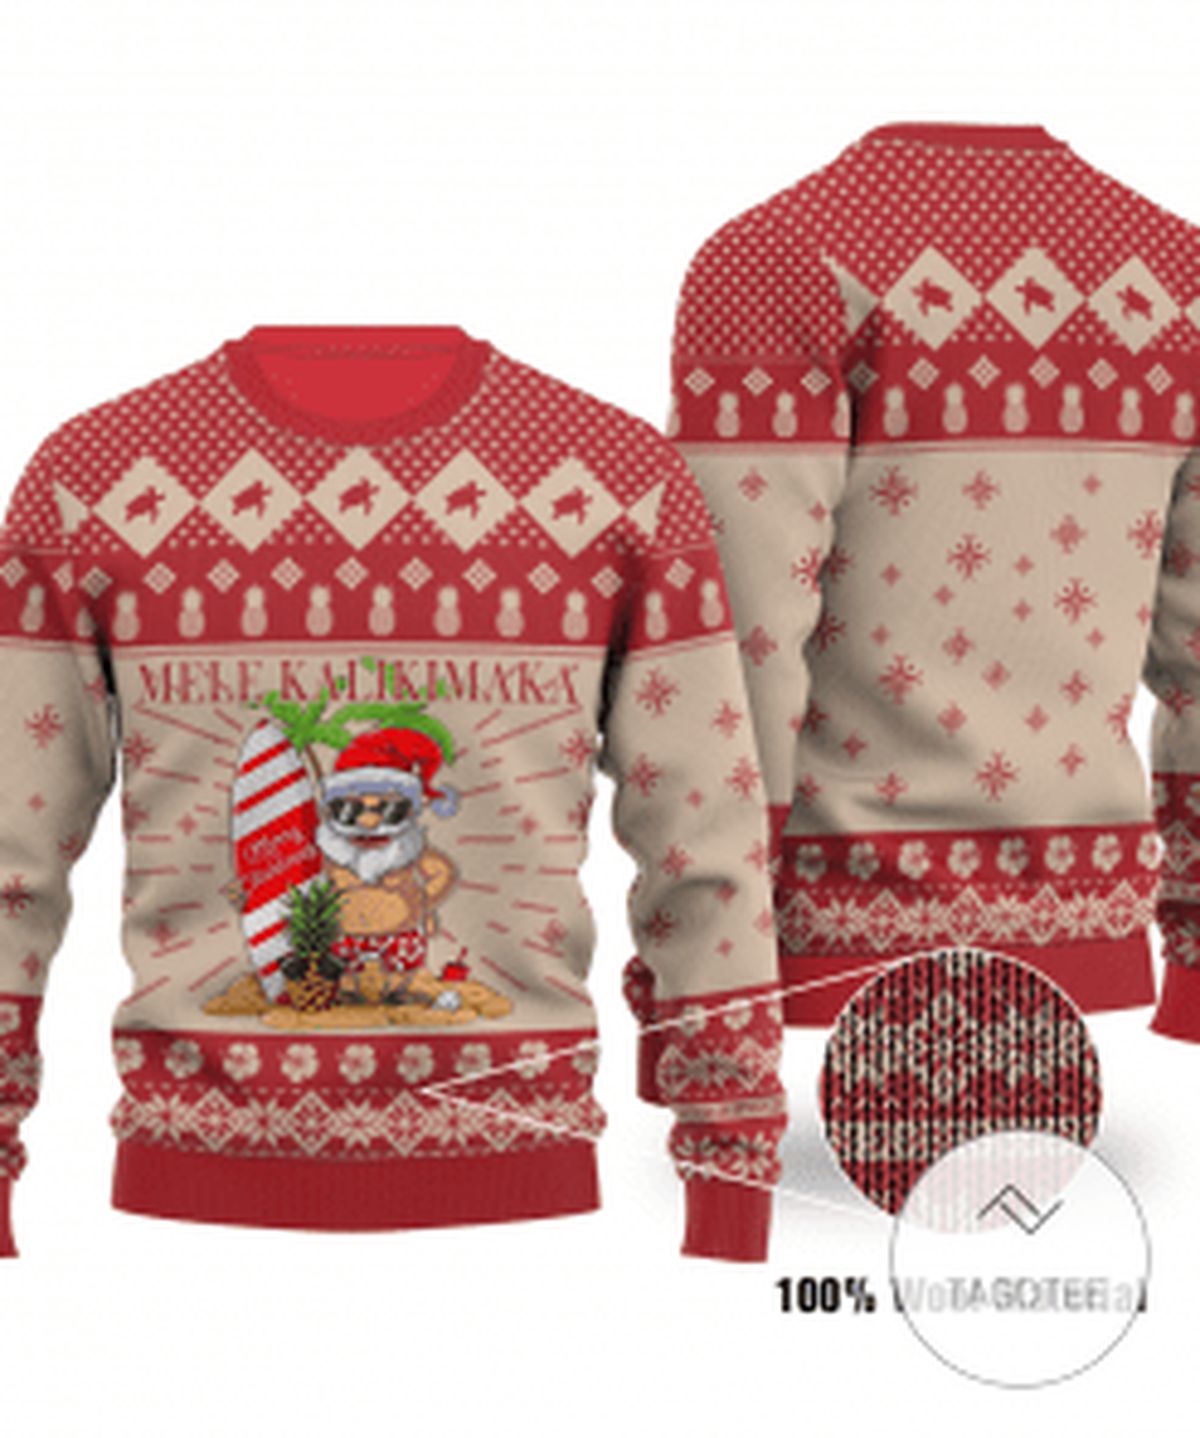 Christmas Aloha Hawaii Mele Kalikimaka Sweatshirt Knitted Ugly Christmas Sweater